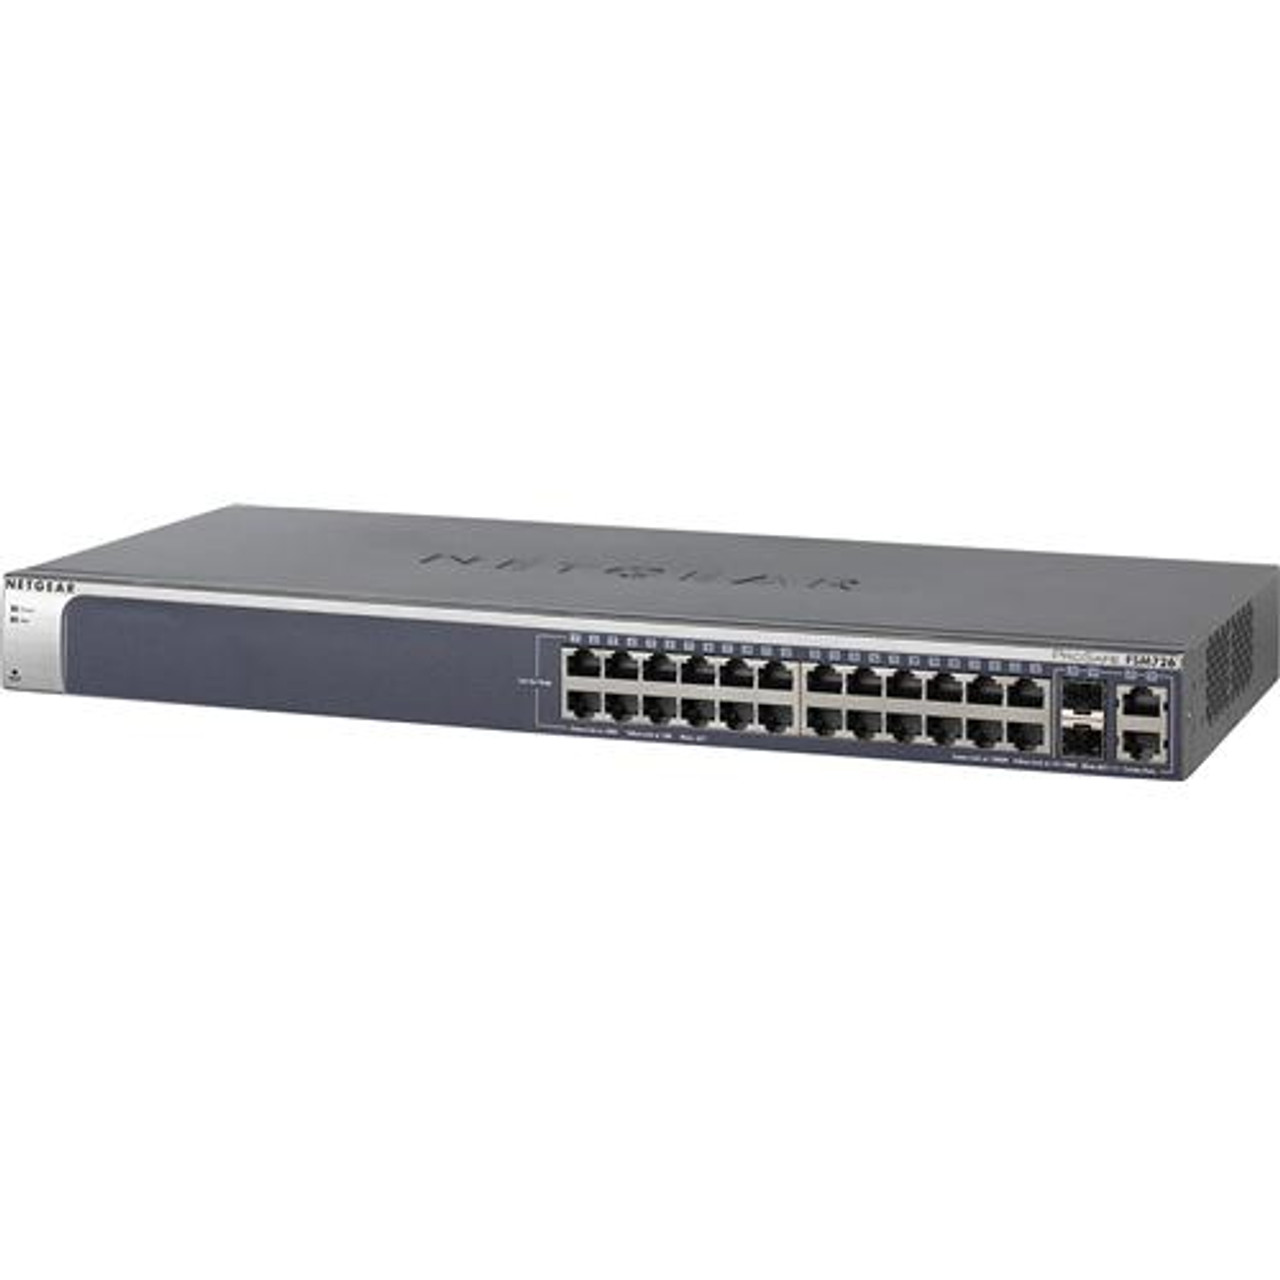 FSM726NA NetGear ProSafe 24-Ports 10/100Mbps Layer 2 Managed Switch with 2 Combo Gigabit Ports (Refurbished)